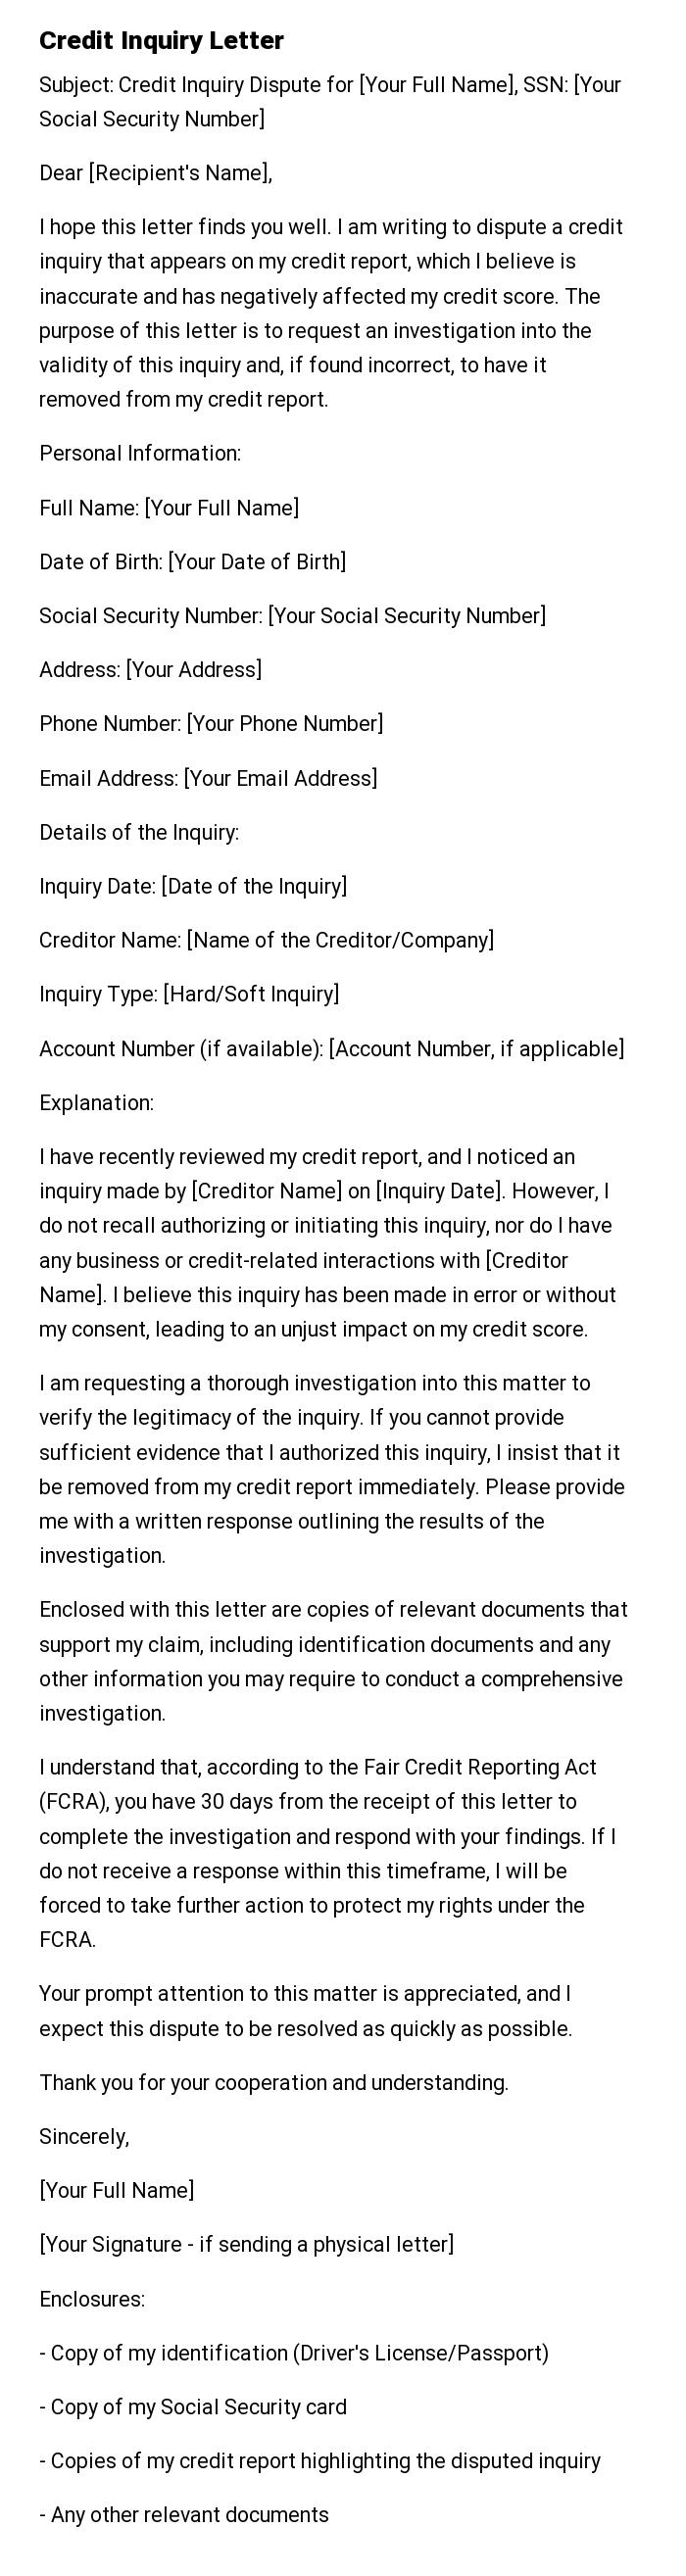 Credit Inquiry Letter